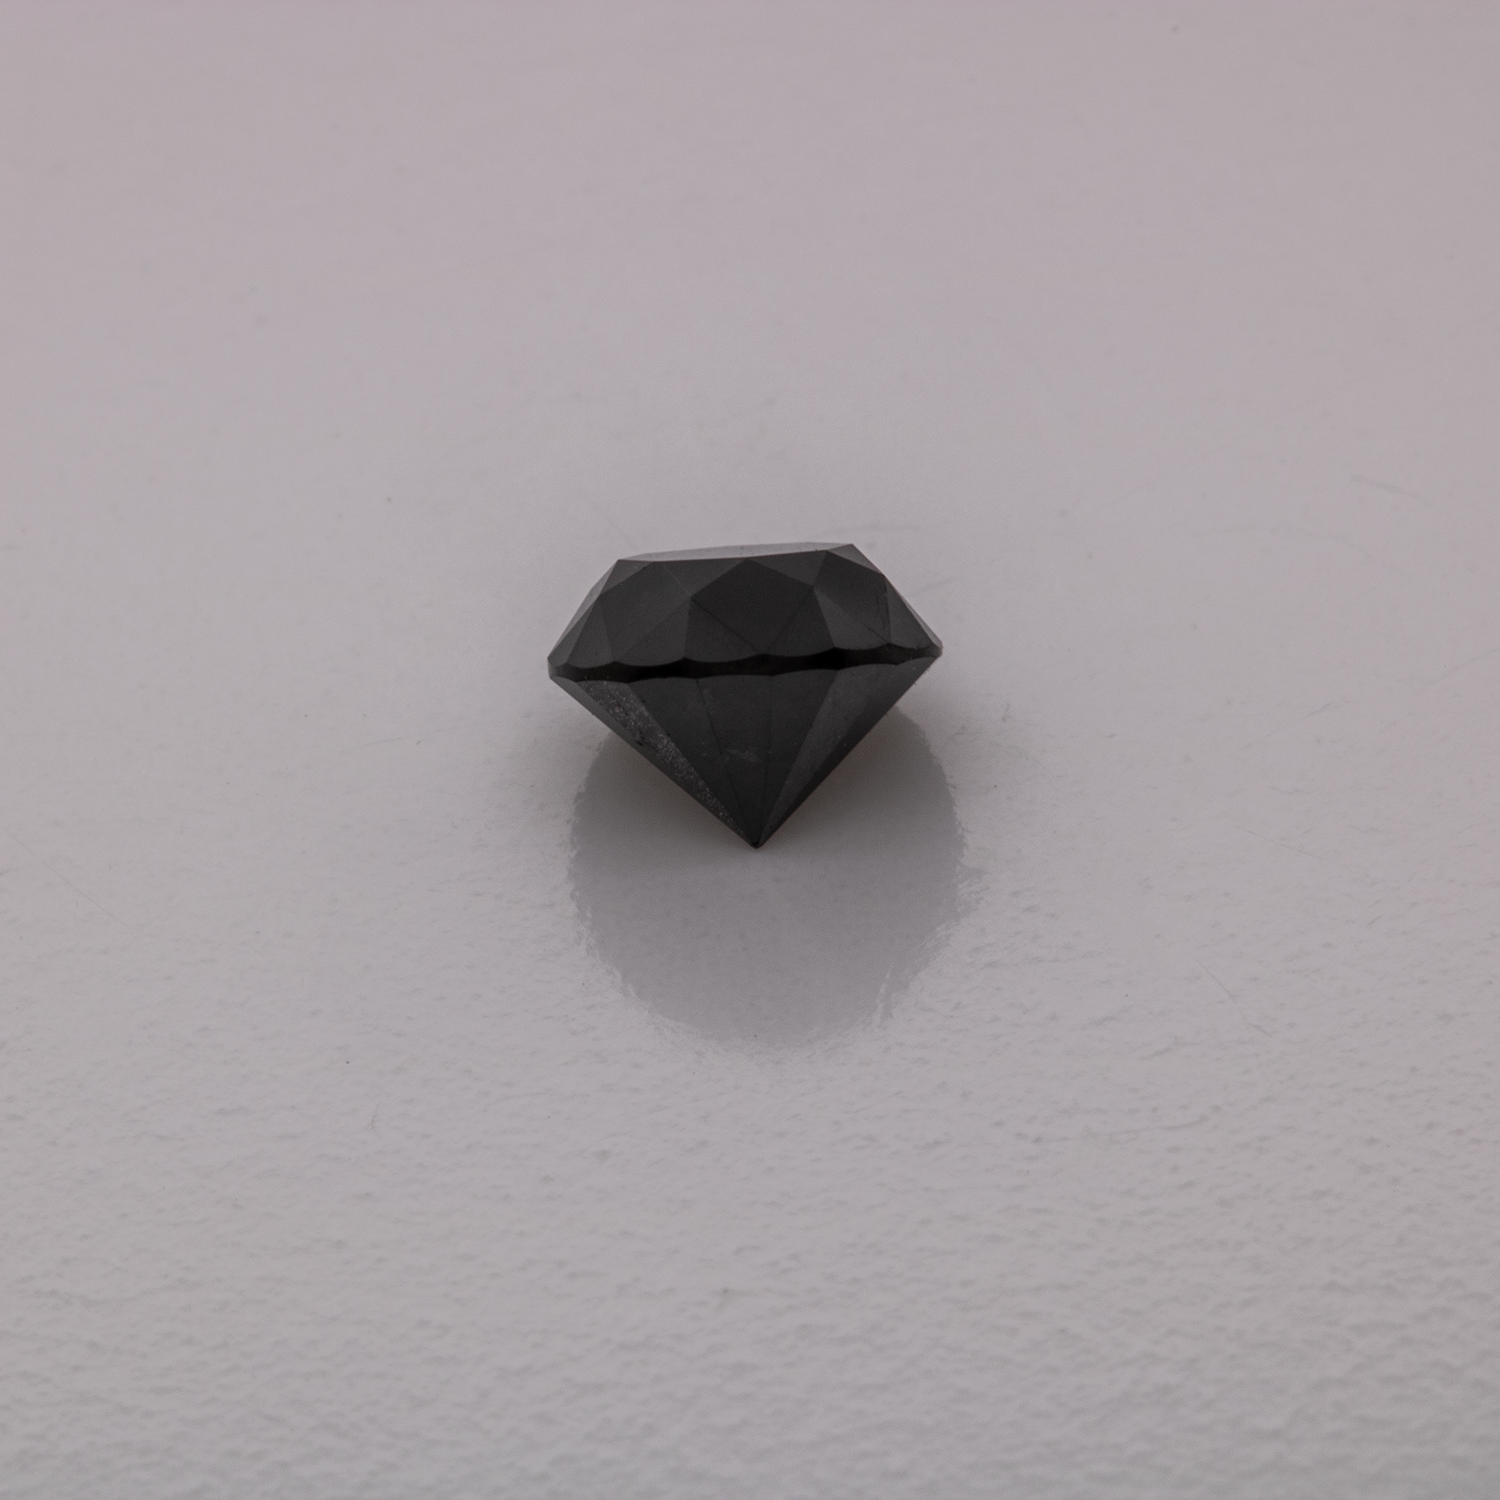 Diamond - black, non-transparent, round, 4.3mm, approx. 0.4 -0.5 cts, No. D11062